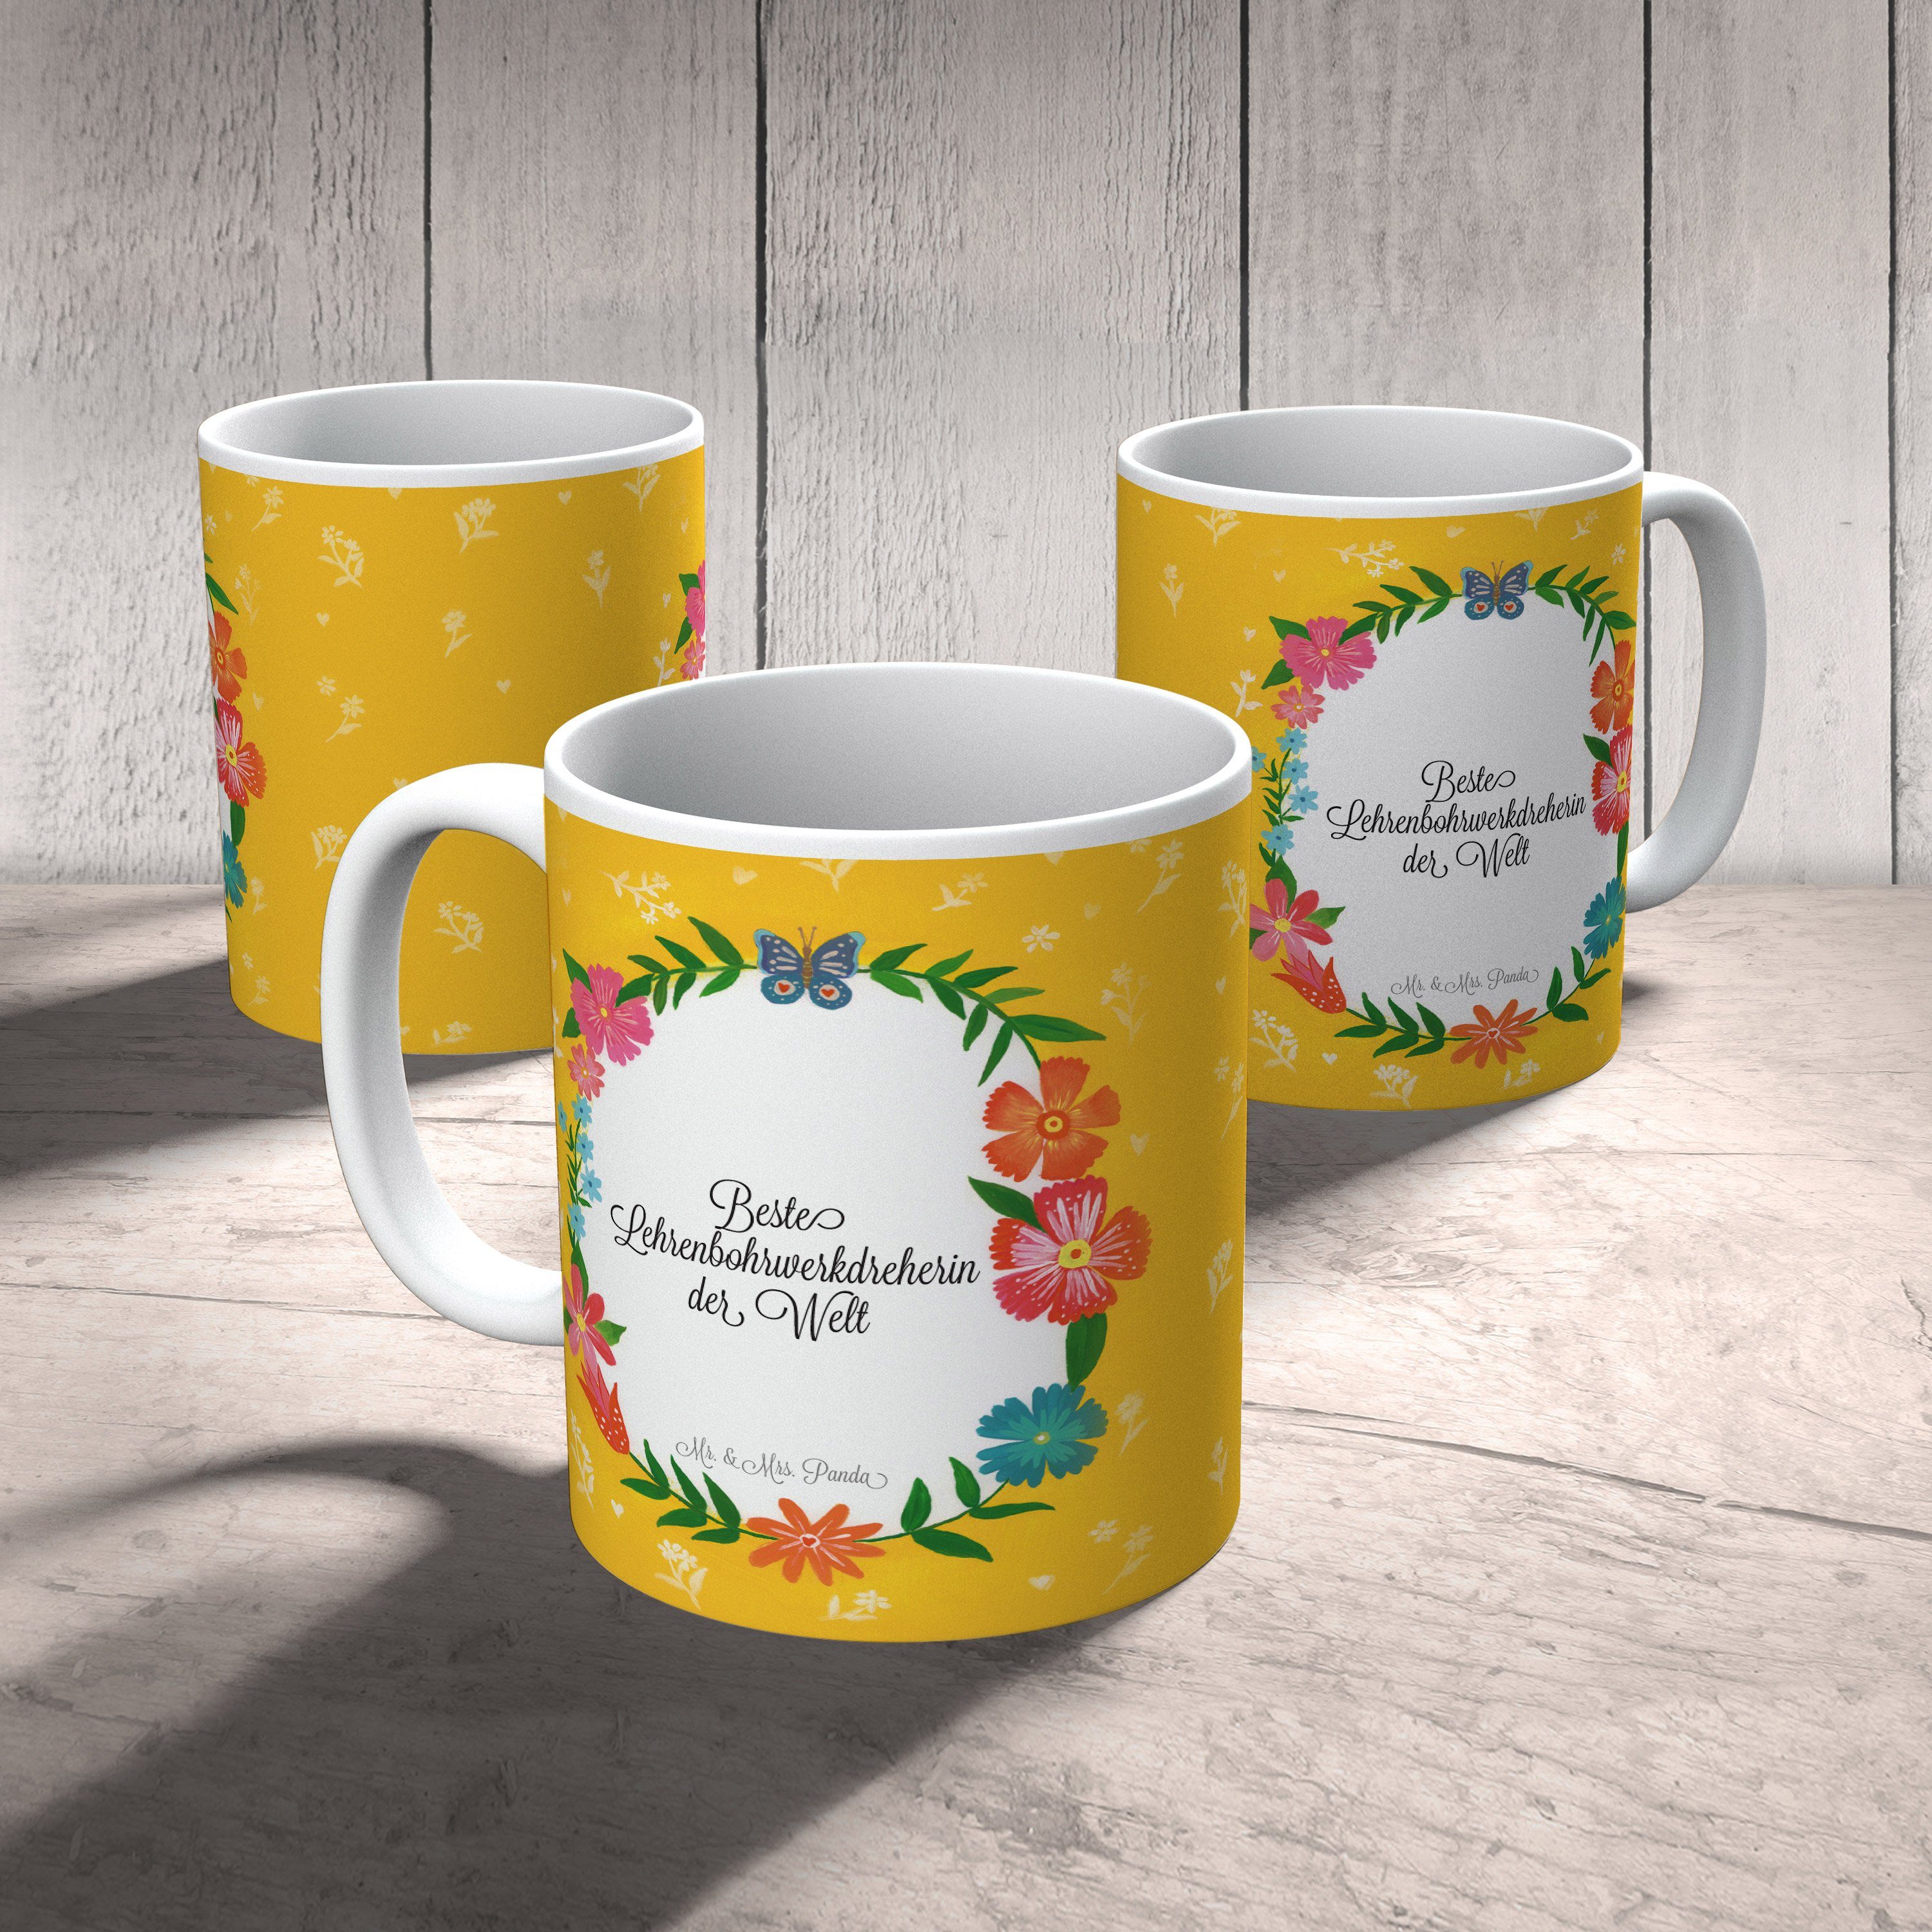 Panda Kaffeetasse, Mrs. Mr. Büro Bachelor, Geschenk, - Tasse, & Keramik Tasse Lehrenbohrwerkdreherin